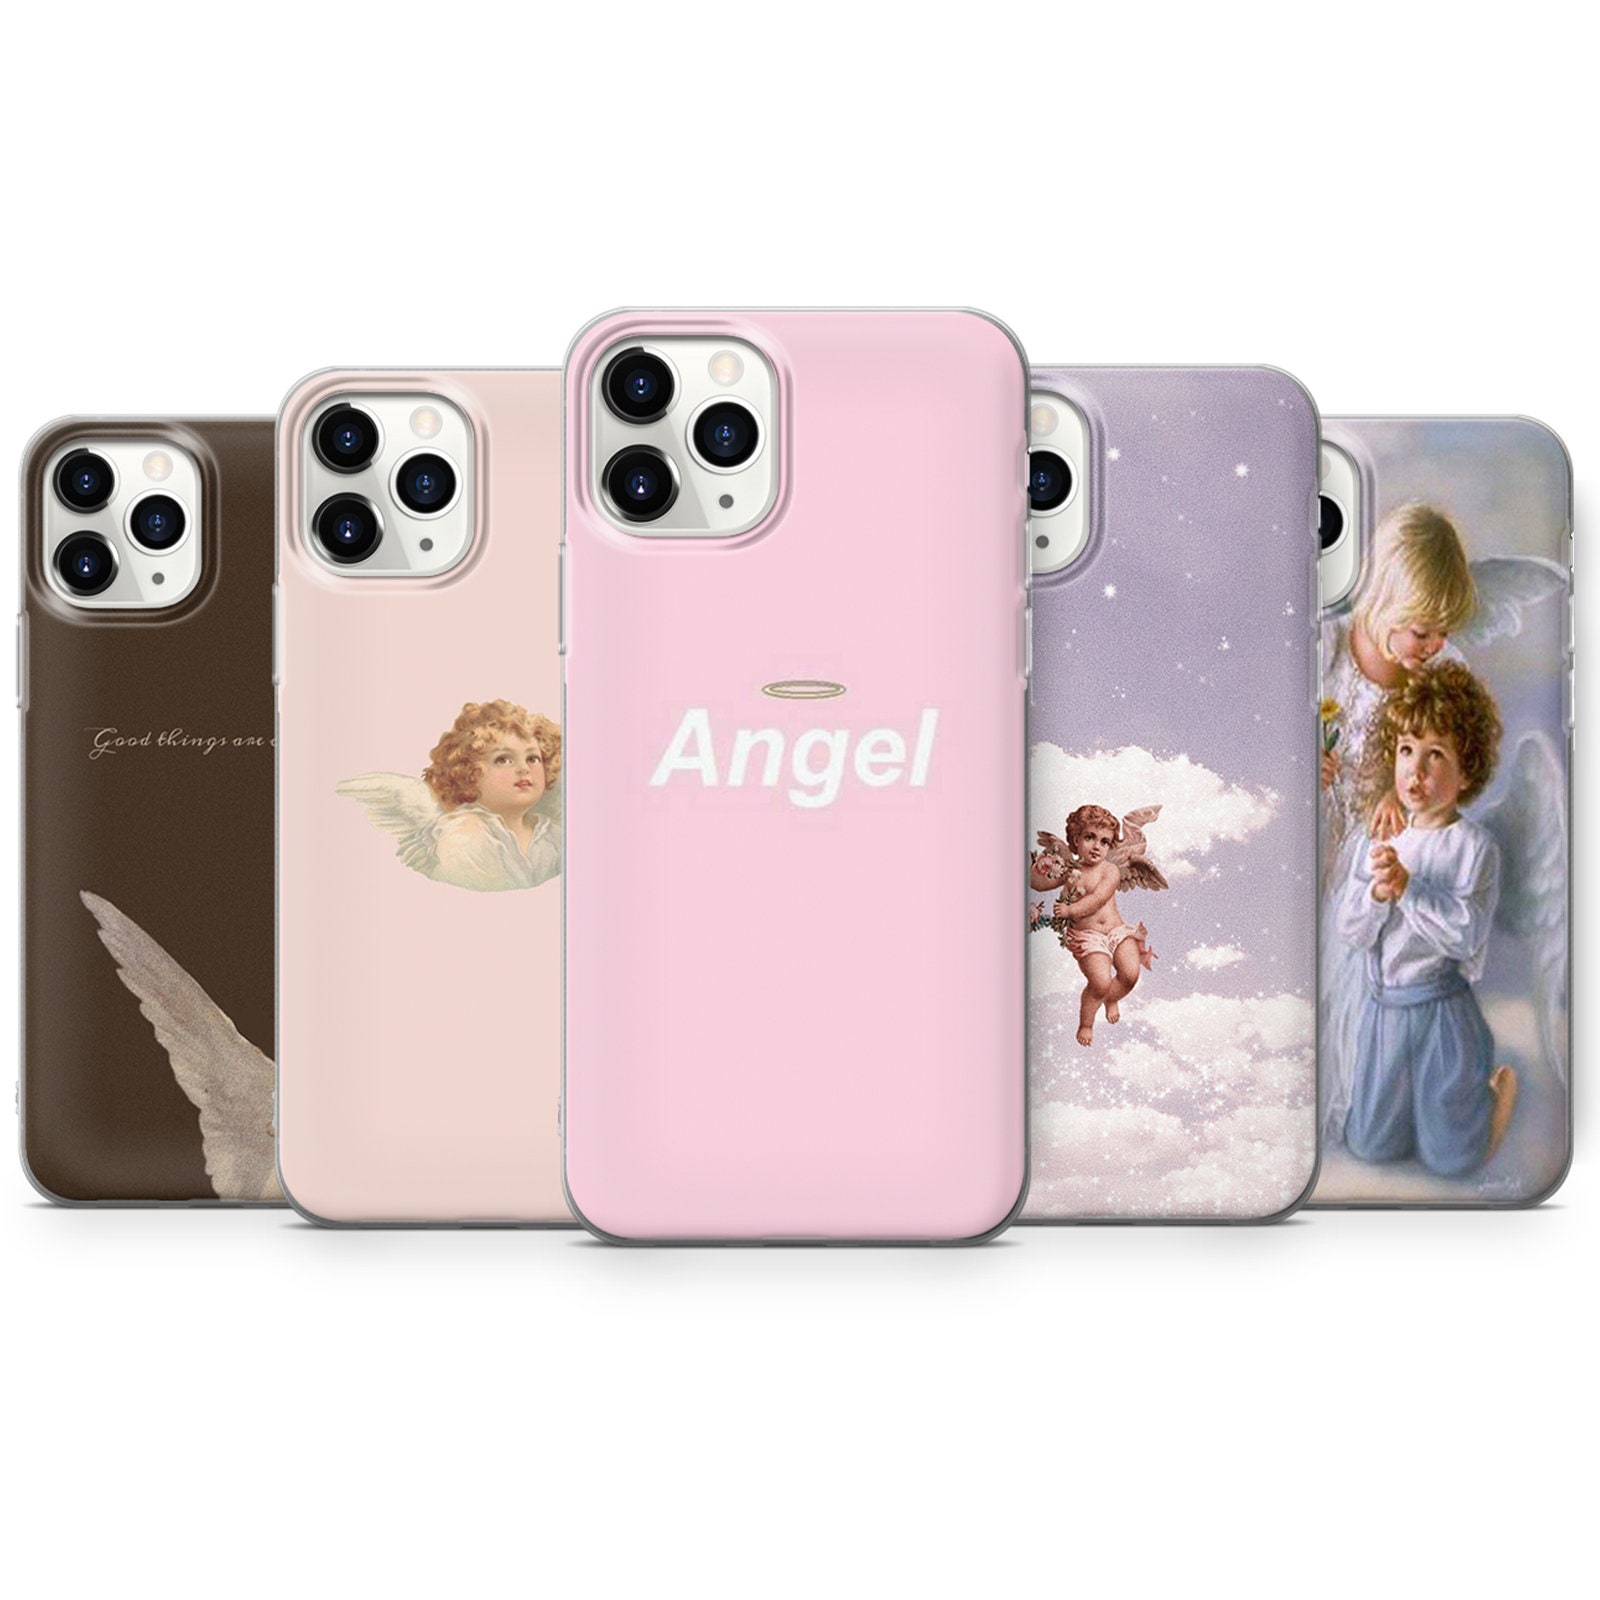 Angel phone case